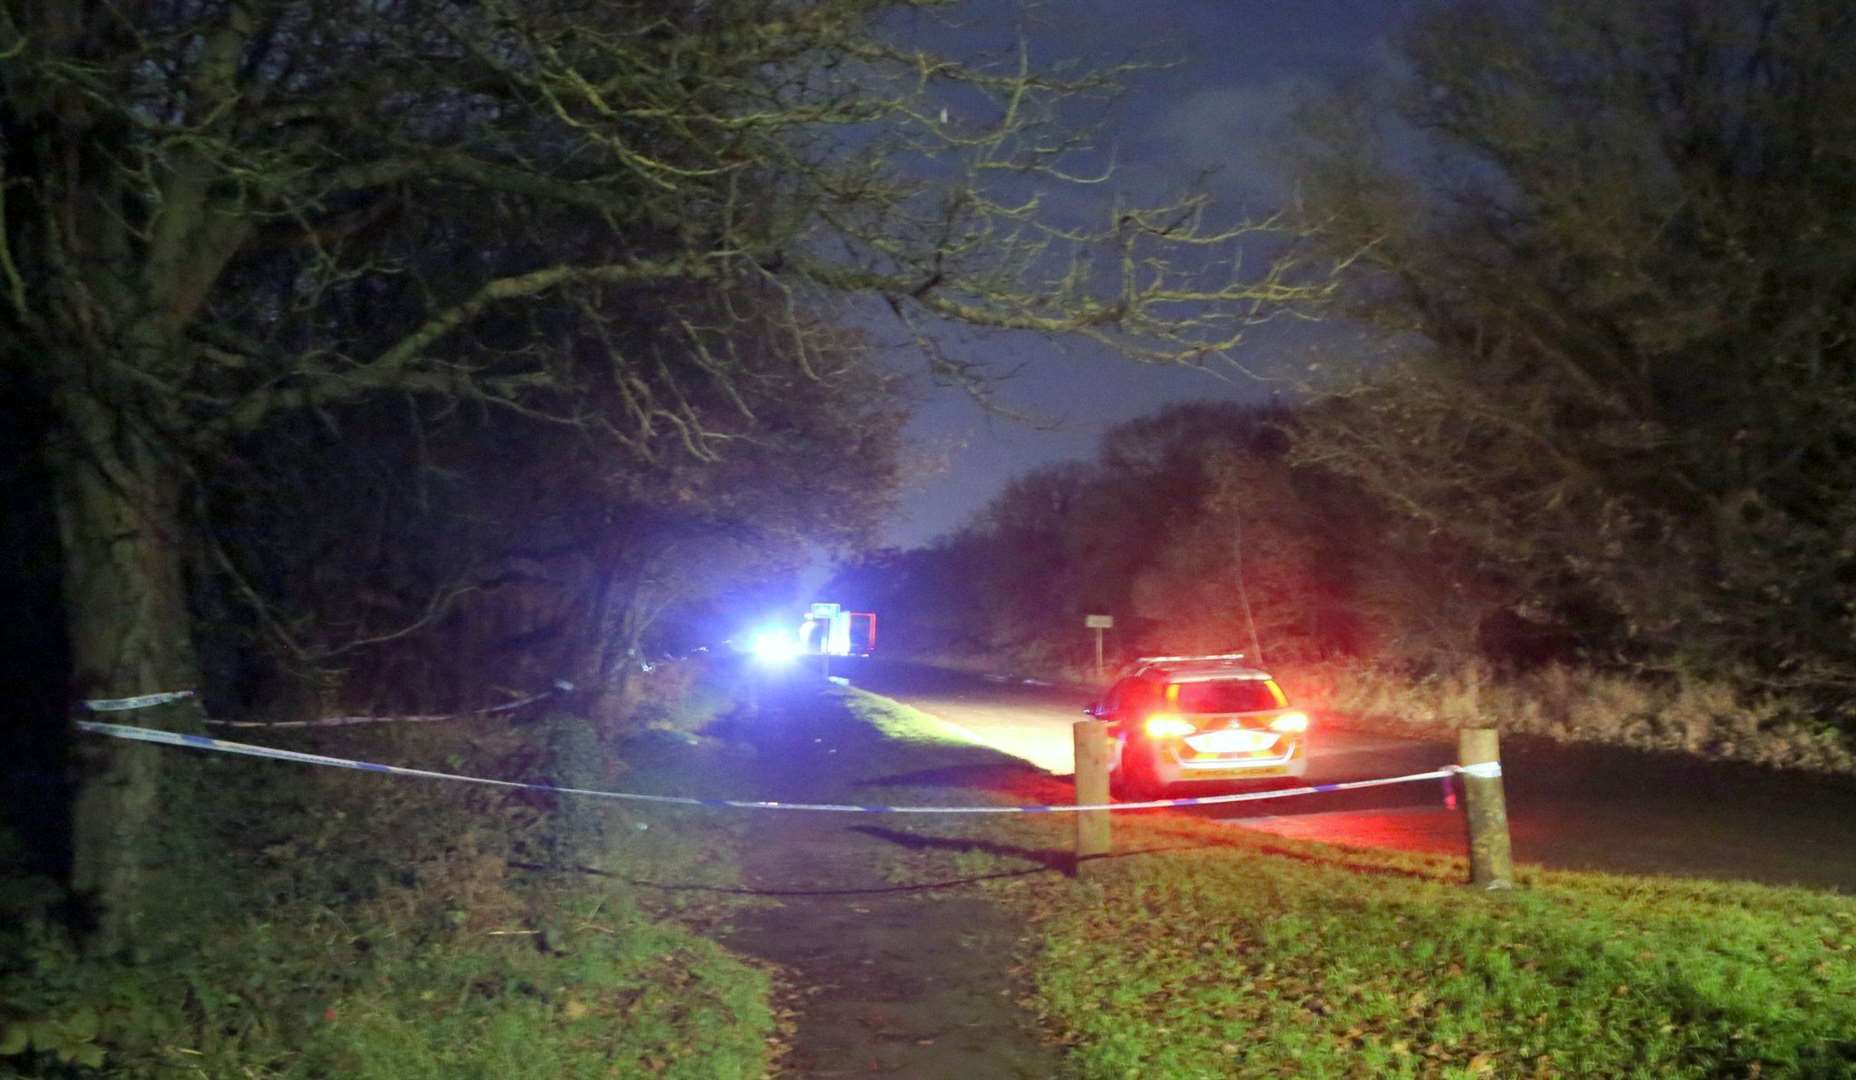 Police at Dartford heath on Friday night (Picture: UKNIP) (23602815)